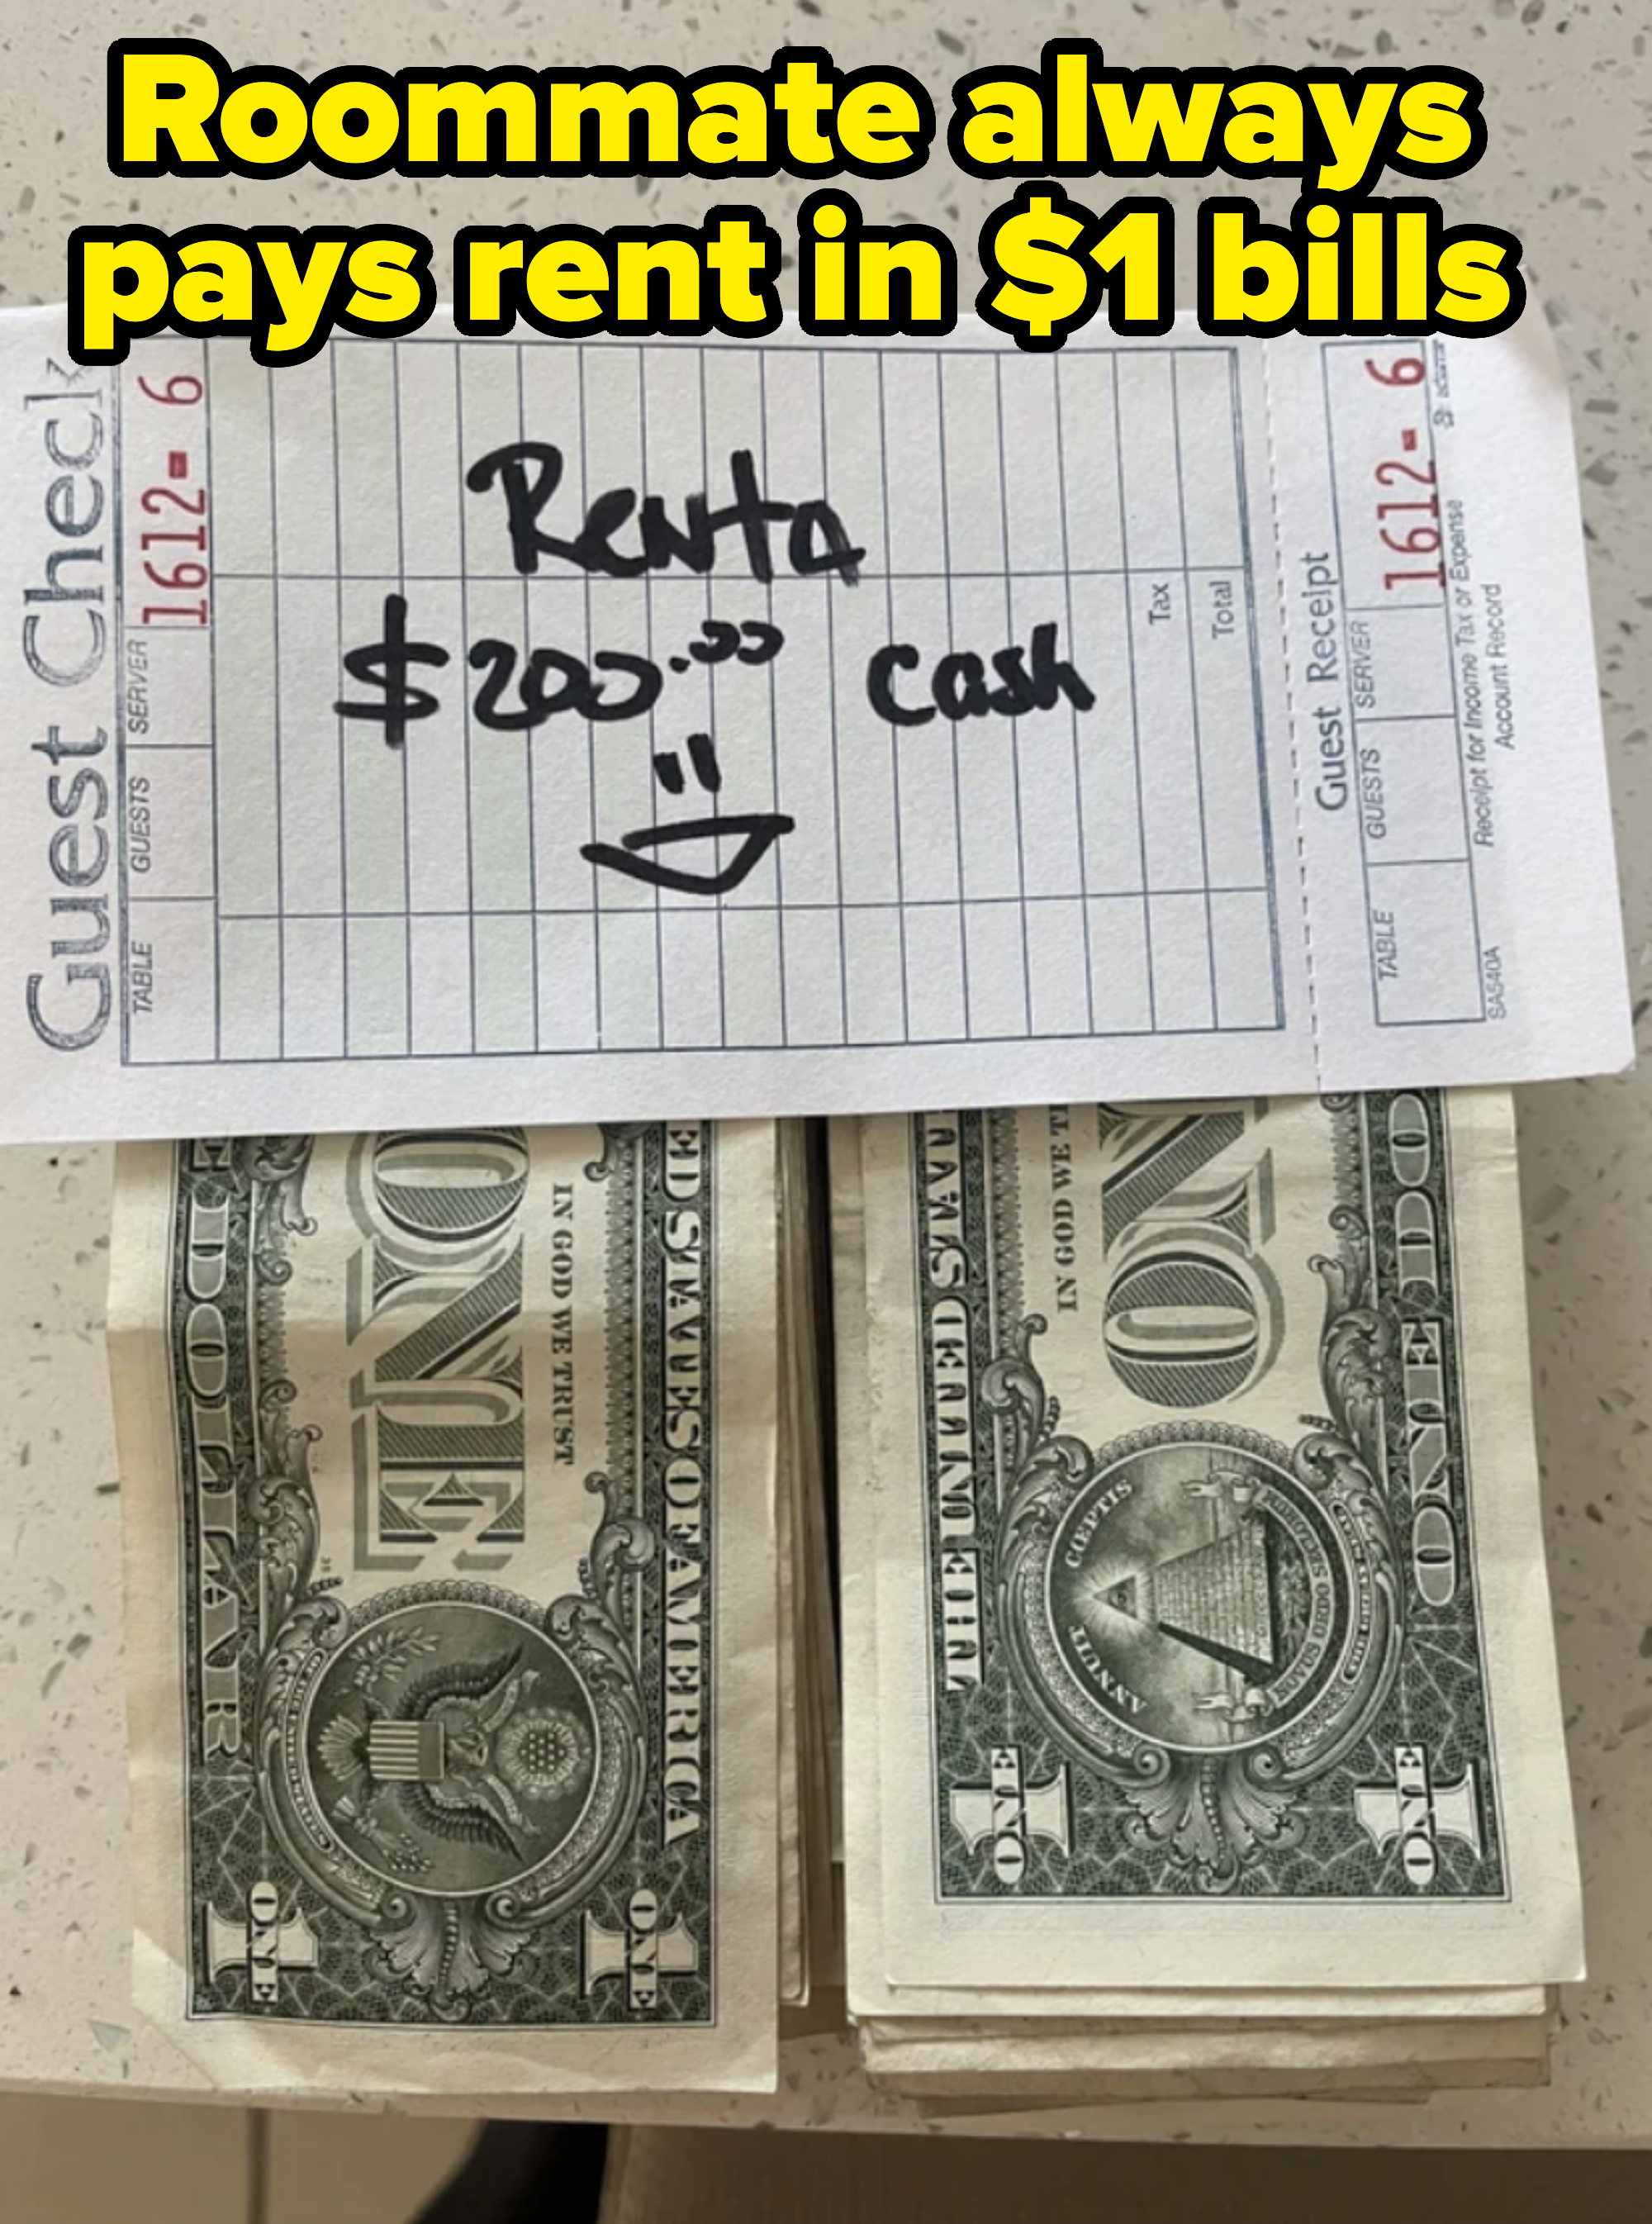 $200 rent paid in one dollar bills